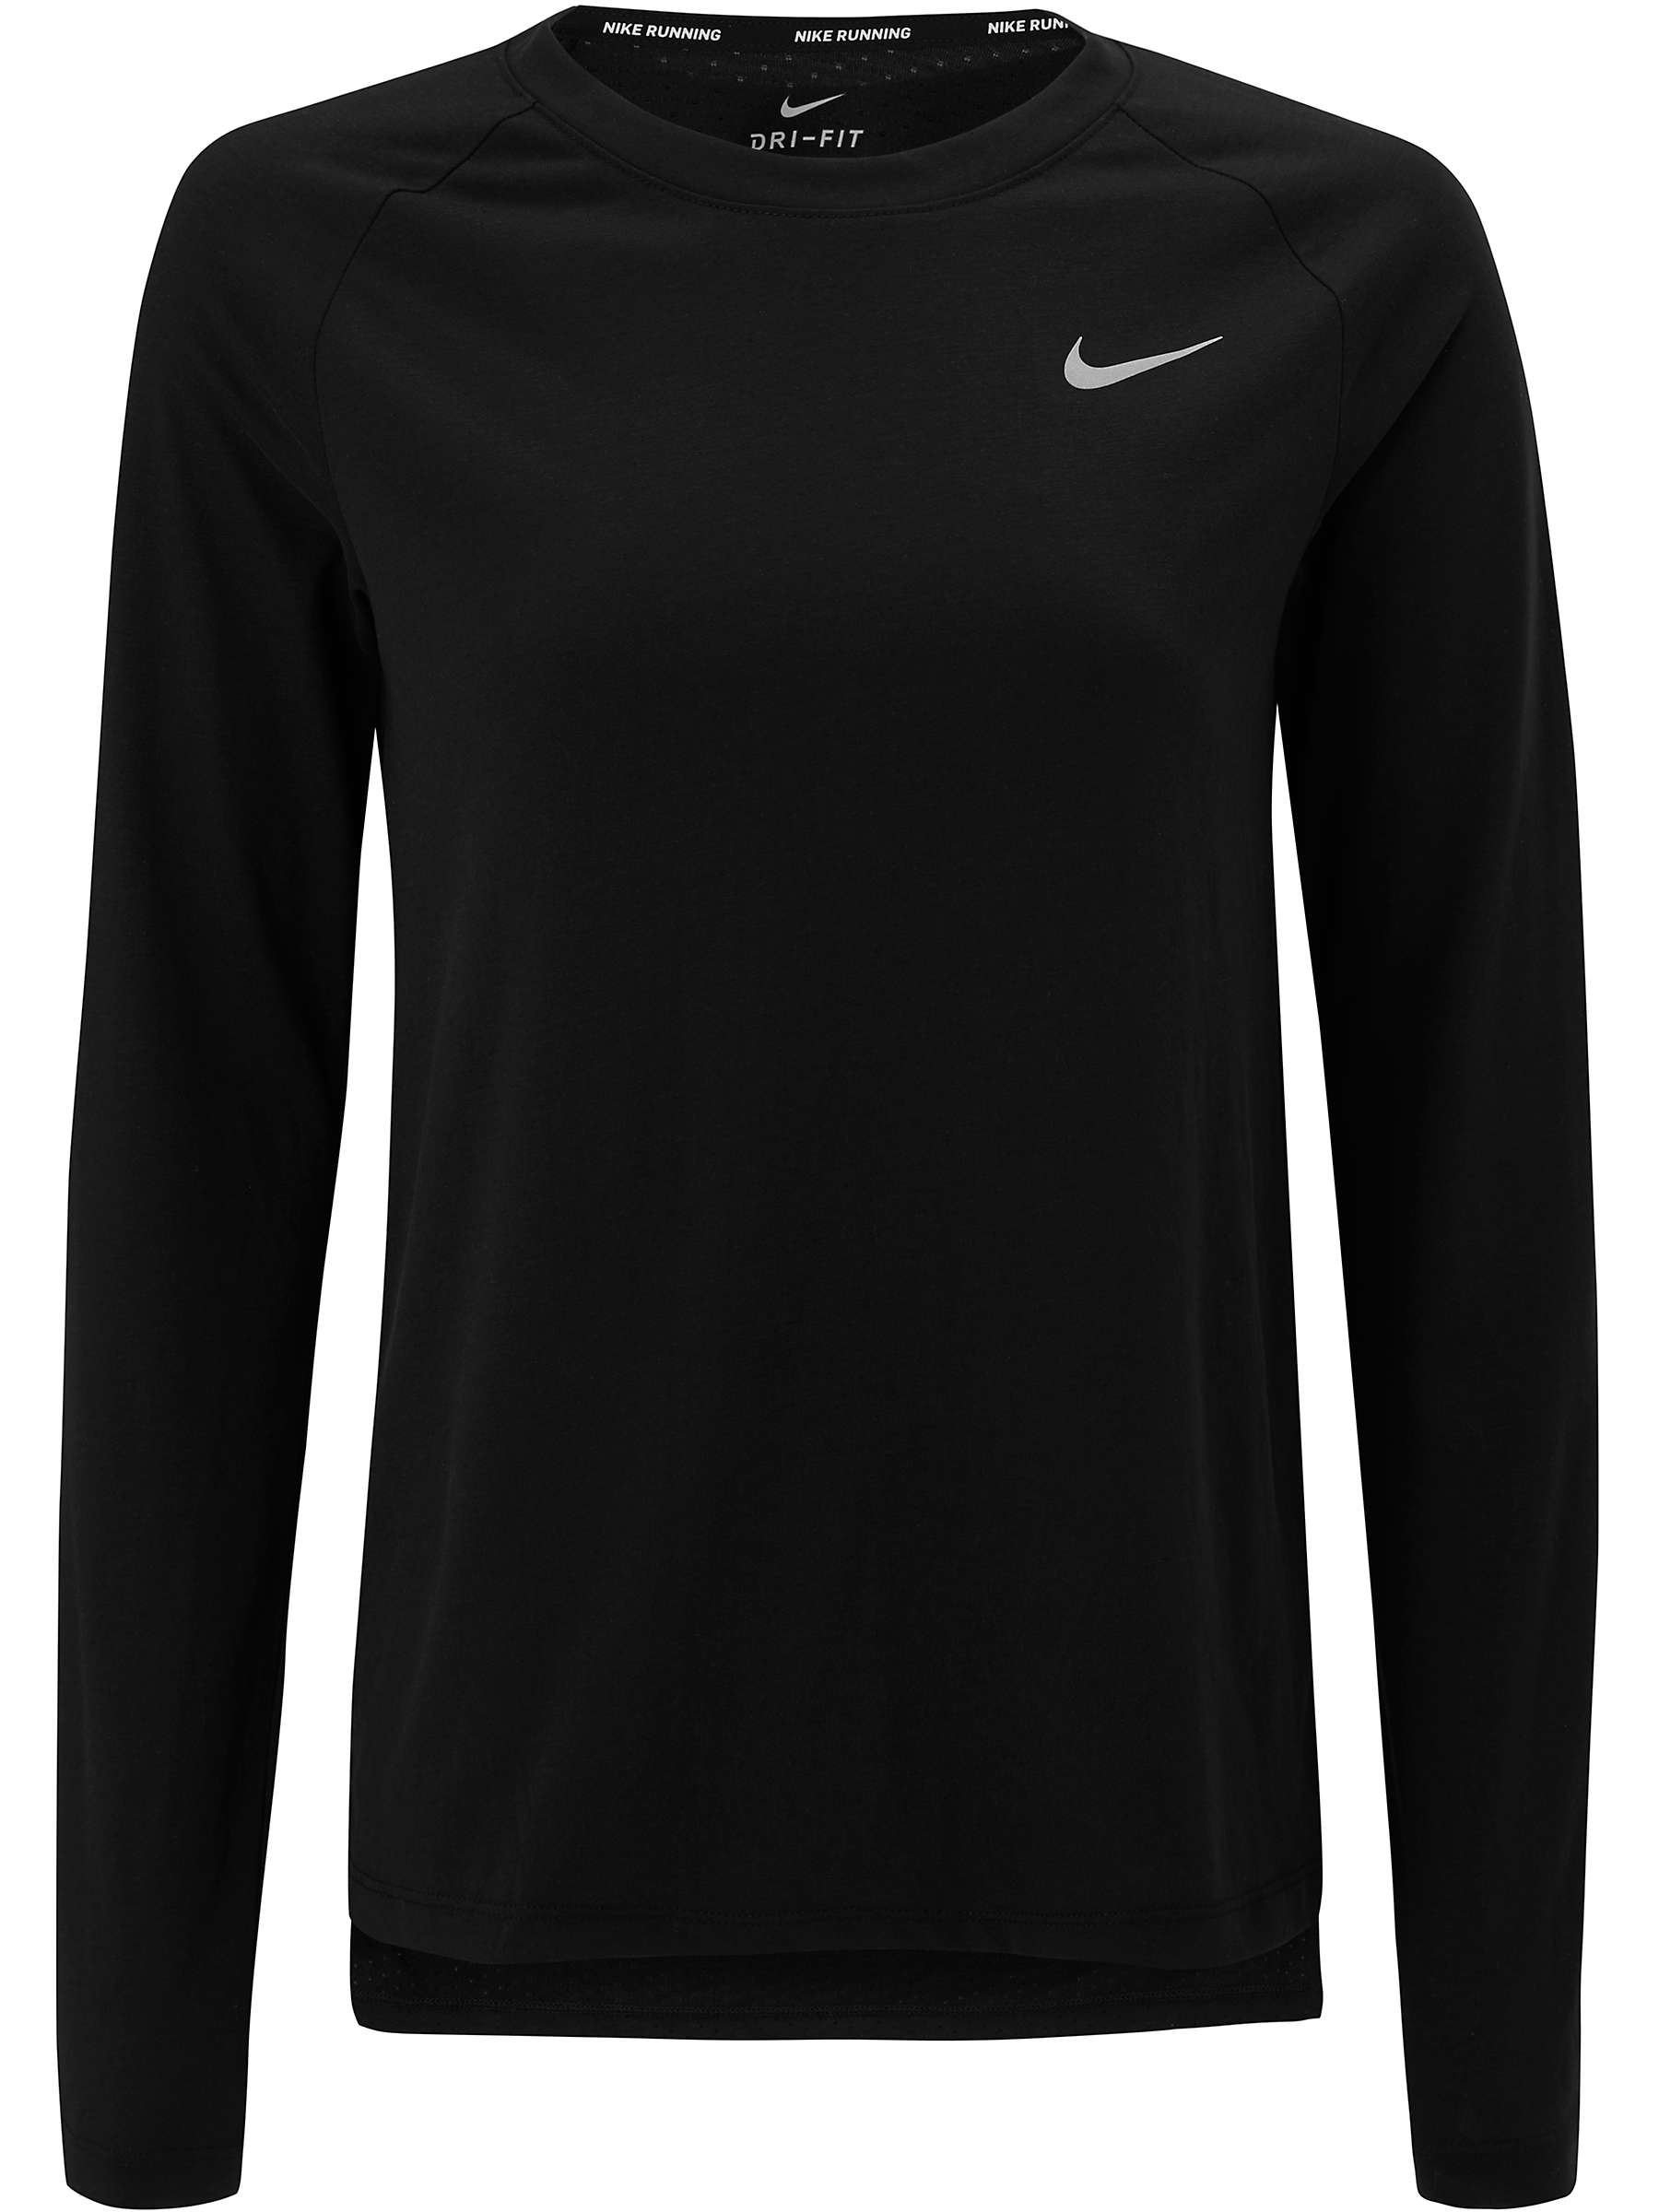 Nike Womens Tailwind Long-Sleeve Running Top Women Clothing Sports ...